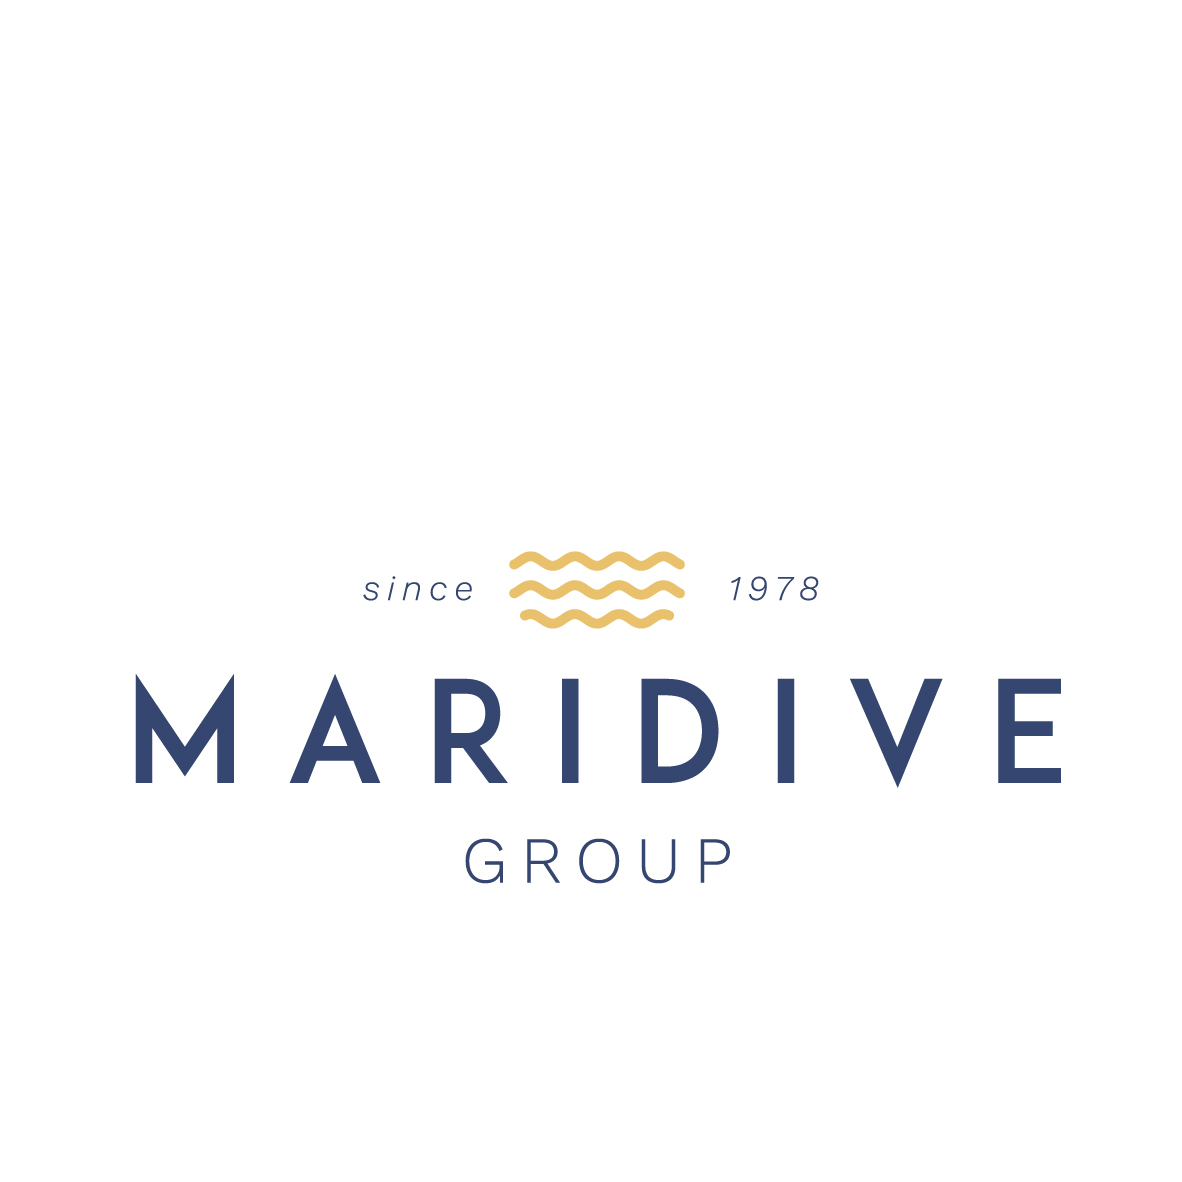 Maridive Group